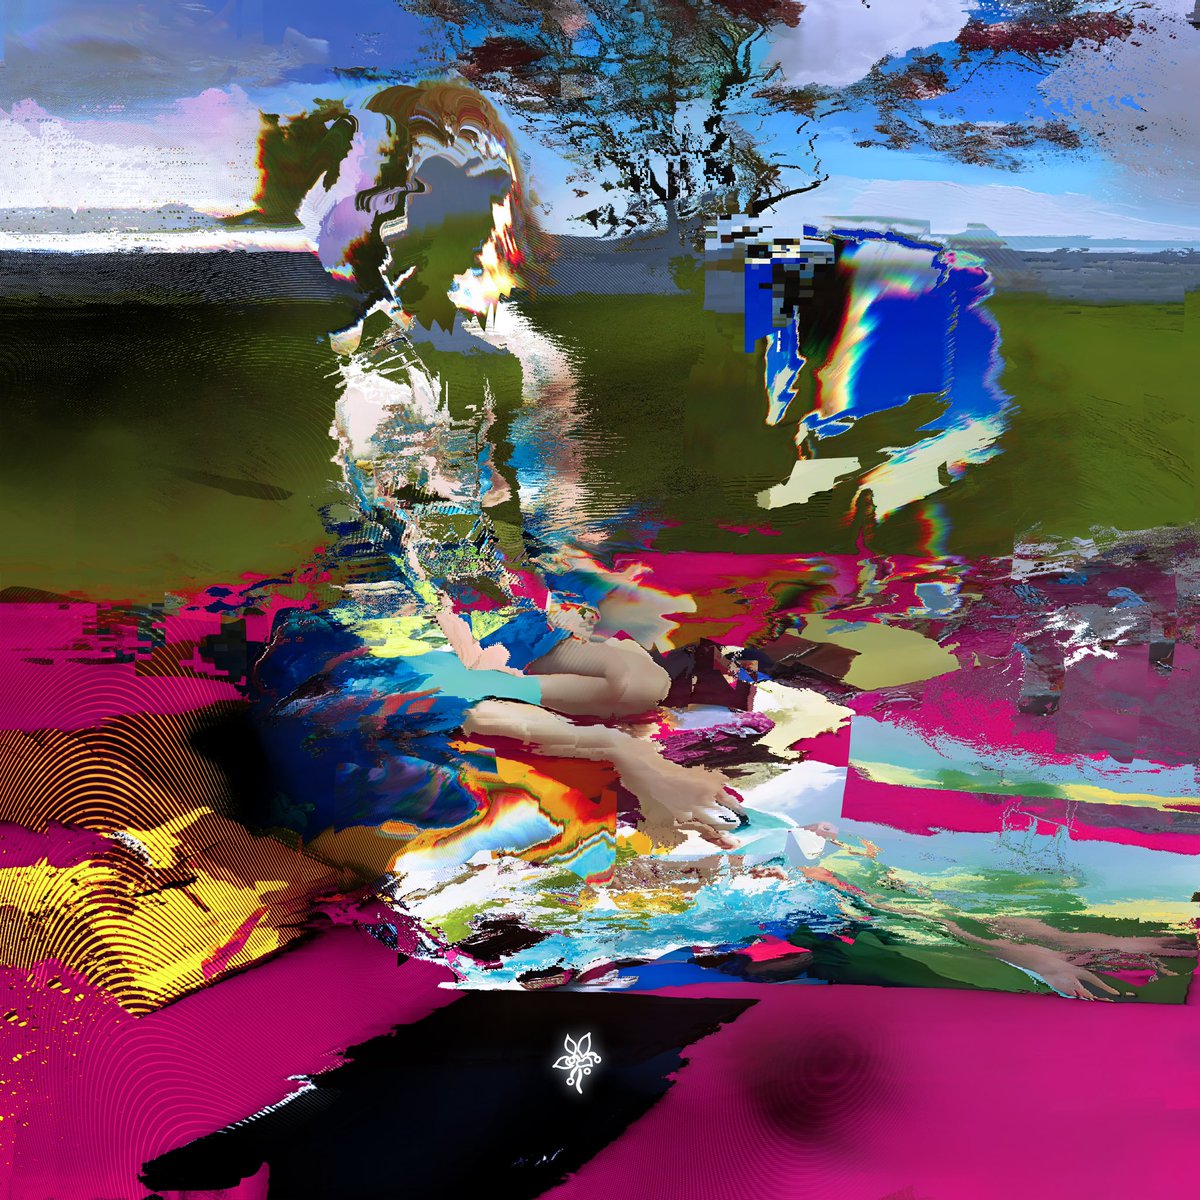 Lonely picnic AI + digital painting 0.1 ETH reserve ⤎ 🔗 foundation.app/@ilya.bliznets…